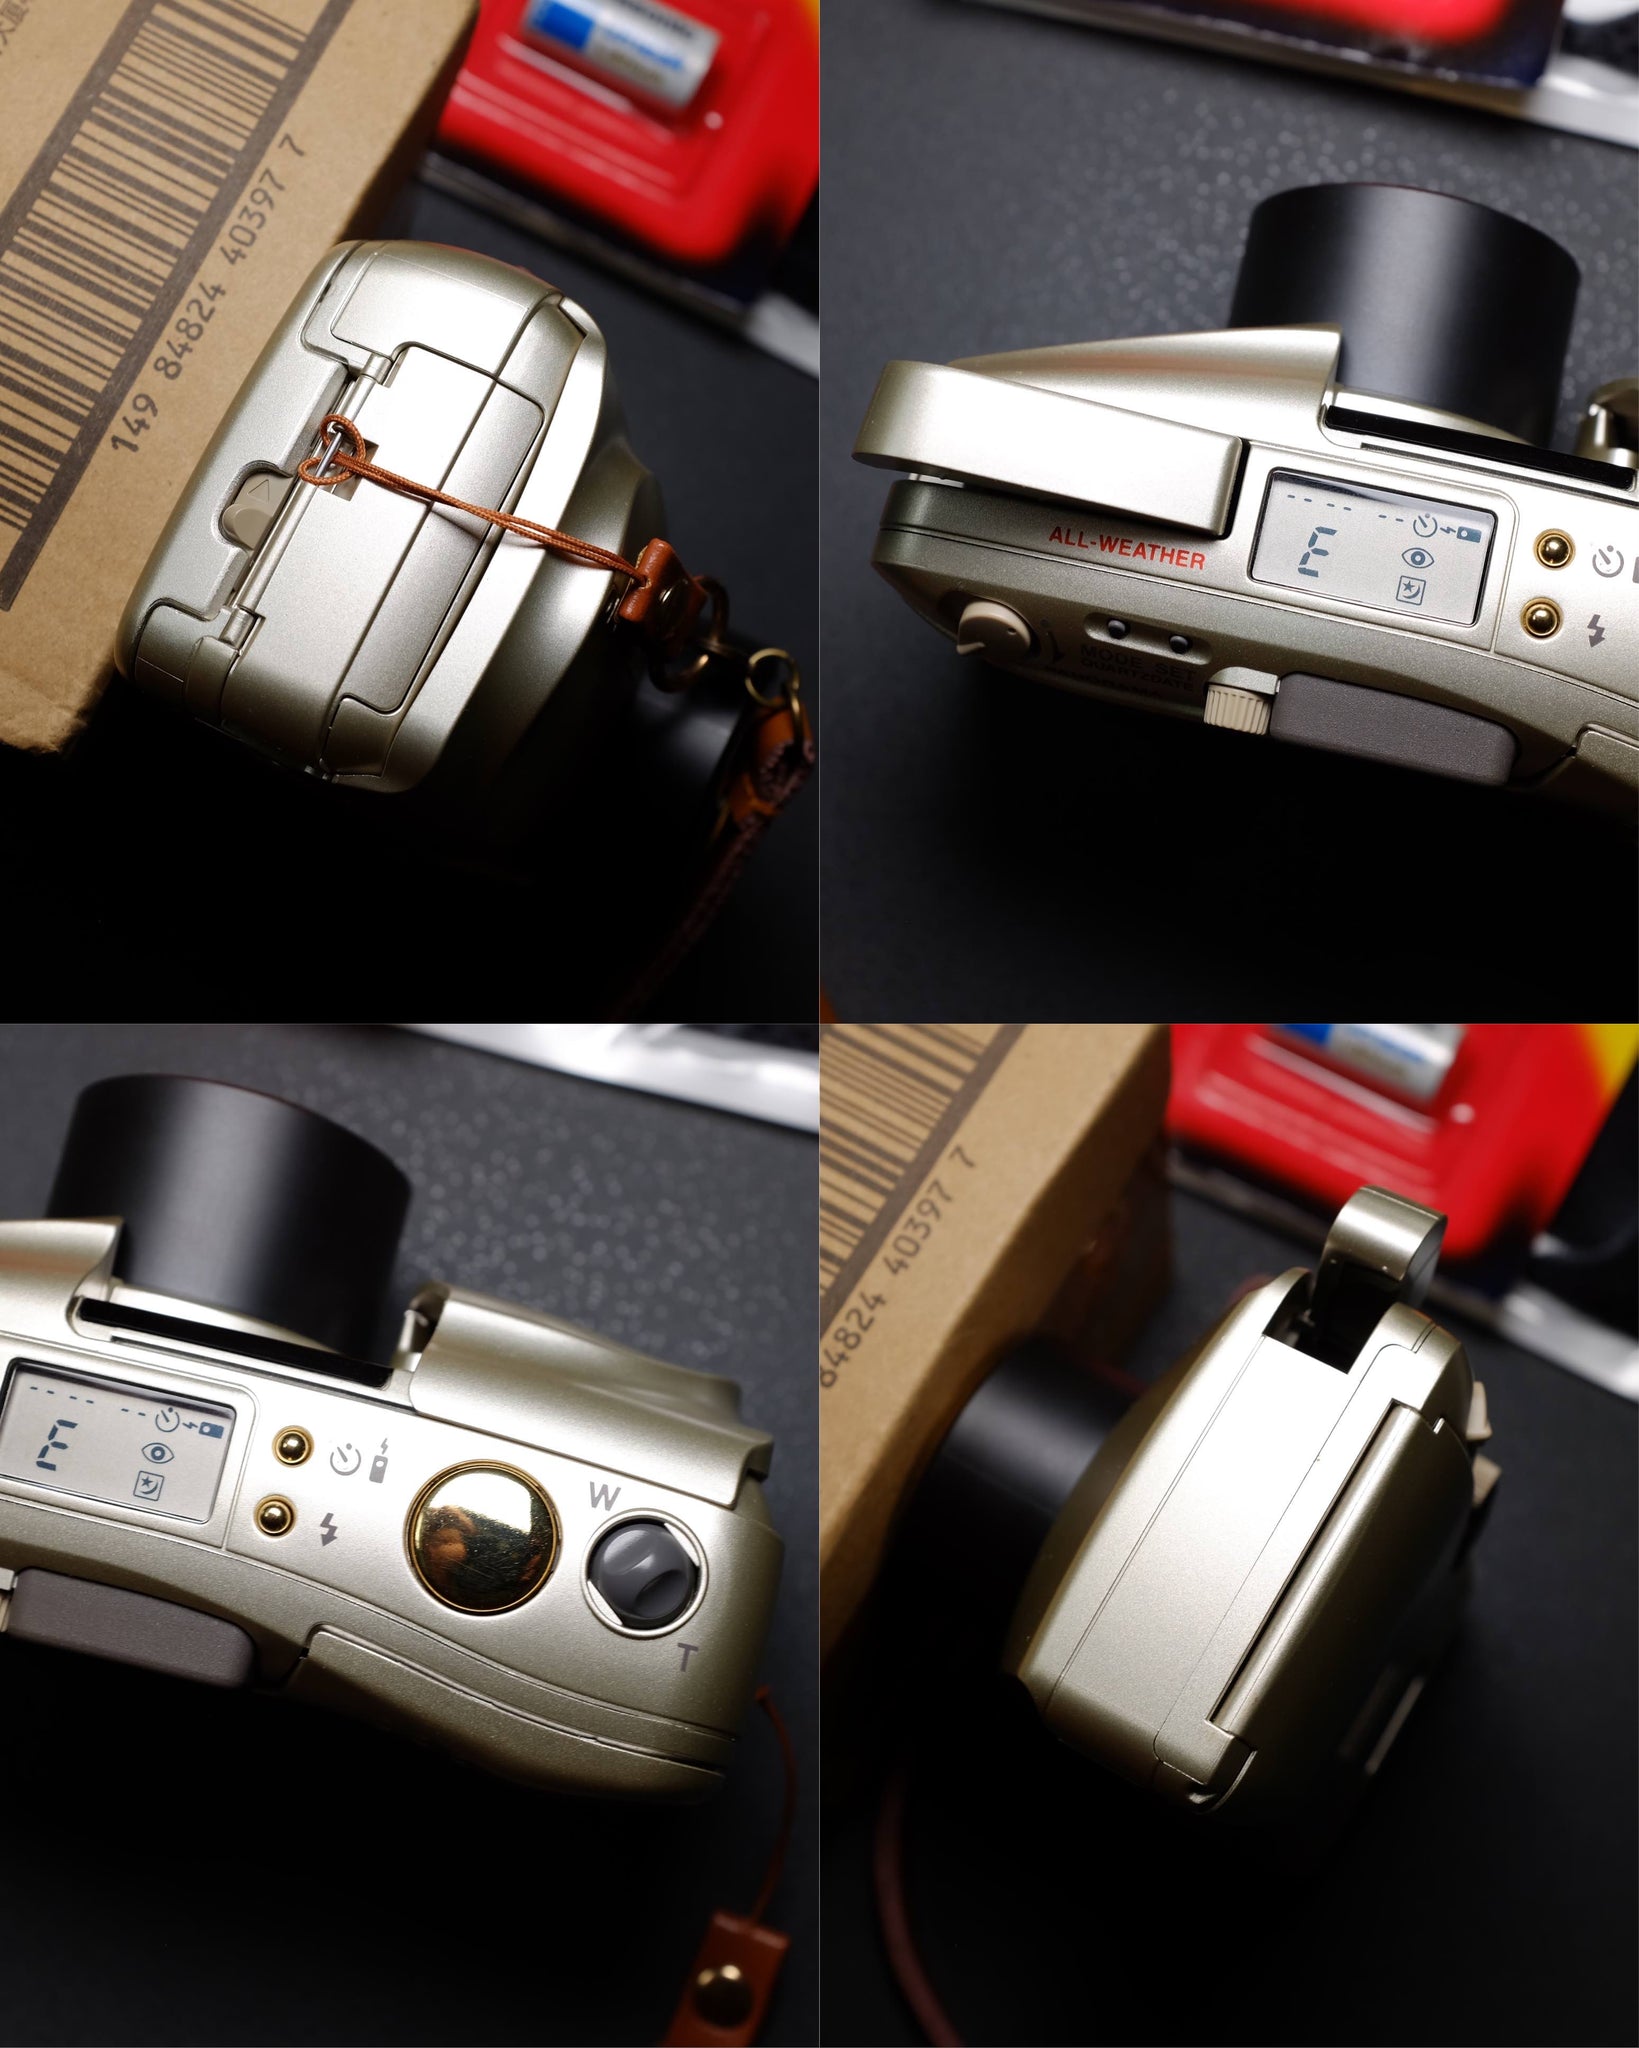 Olympus μ [mju:] Zoom 115 Deluxe SN: 5206692 – Nipponina Camera